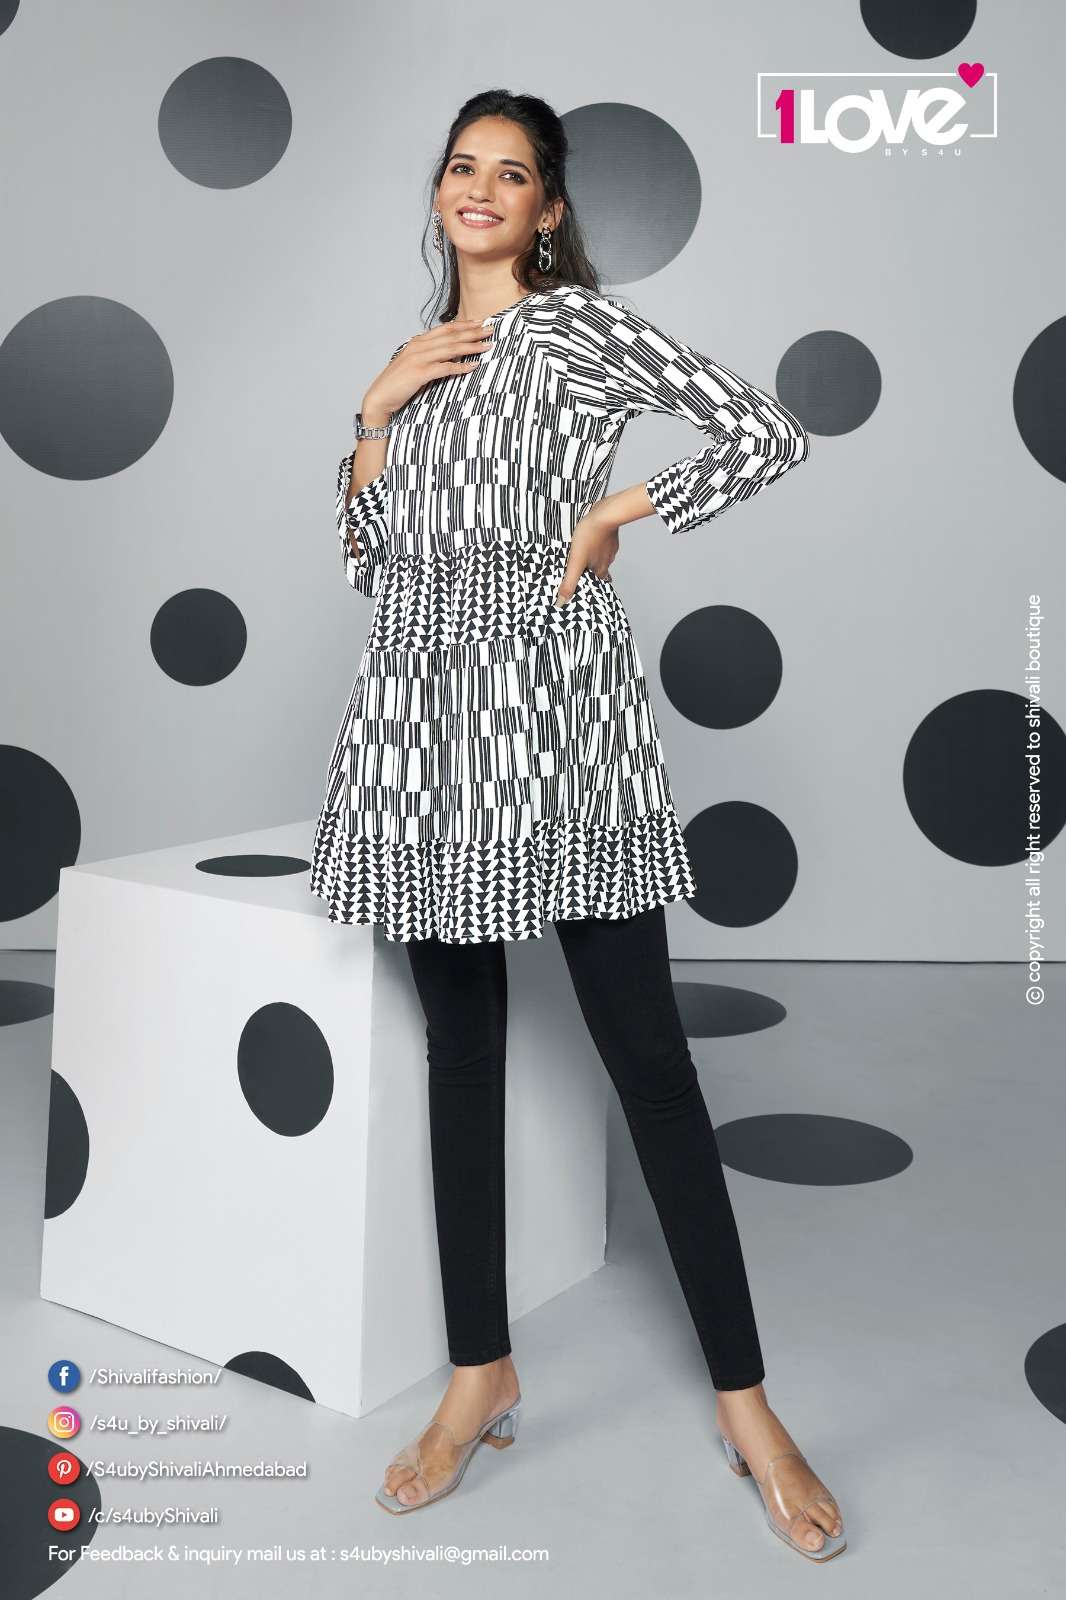 s4u wedesi 01-06 series fancy designer shorts tops latest collection surat 